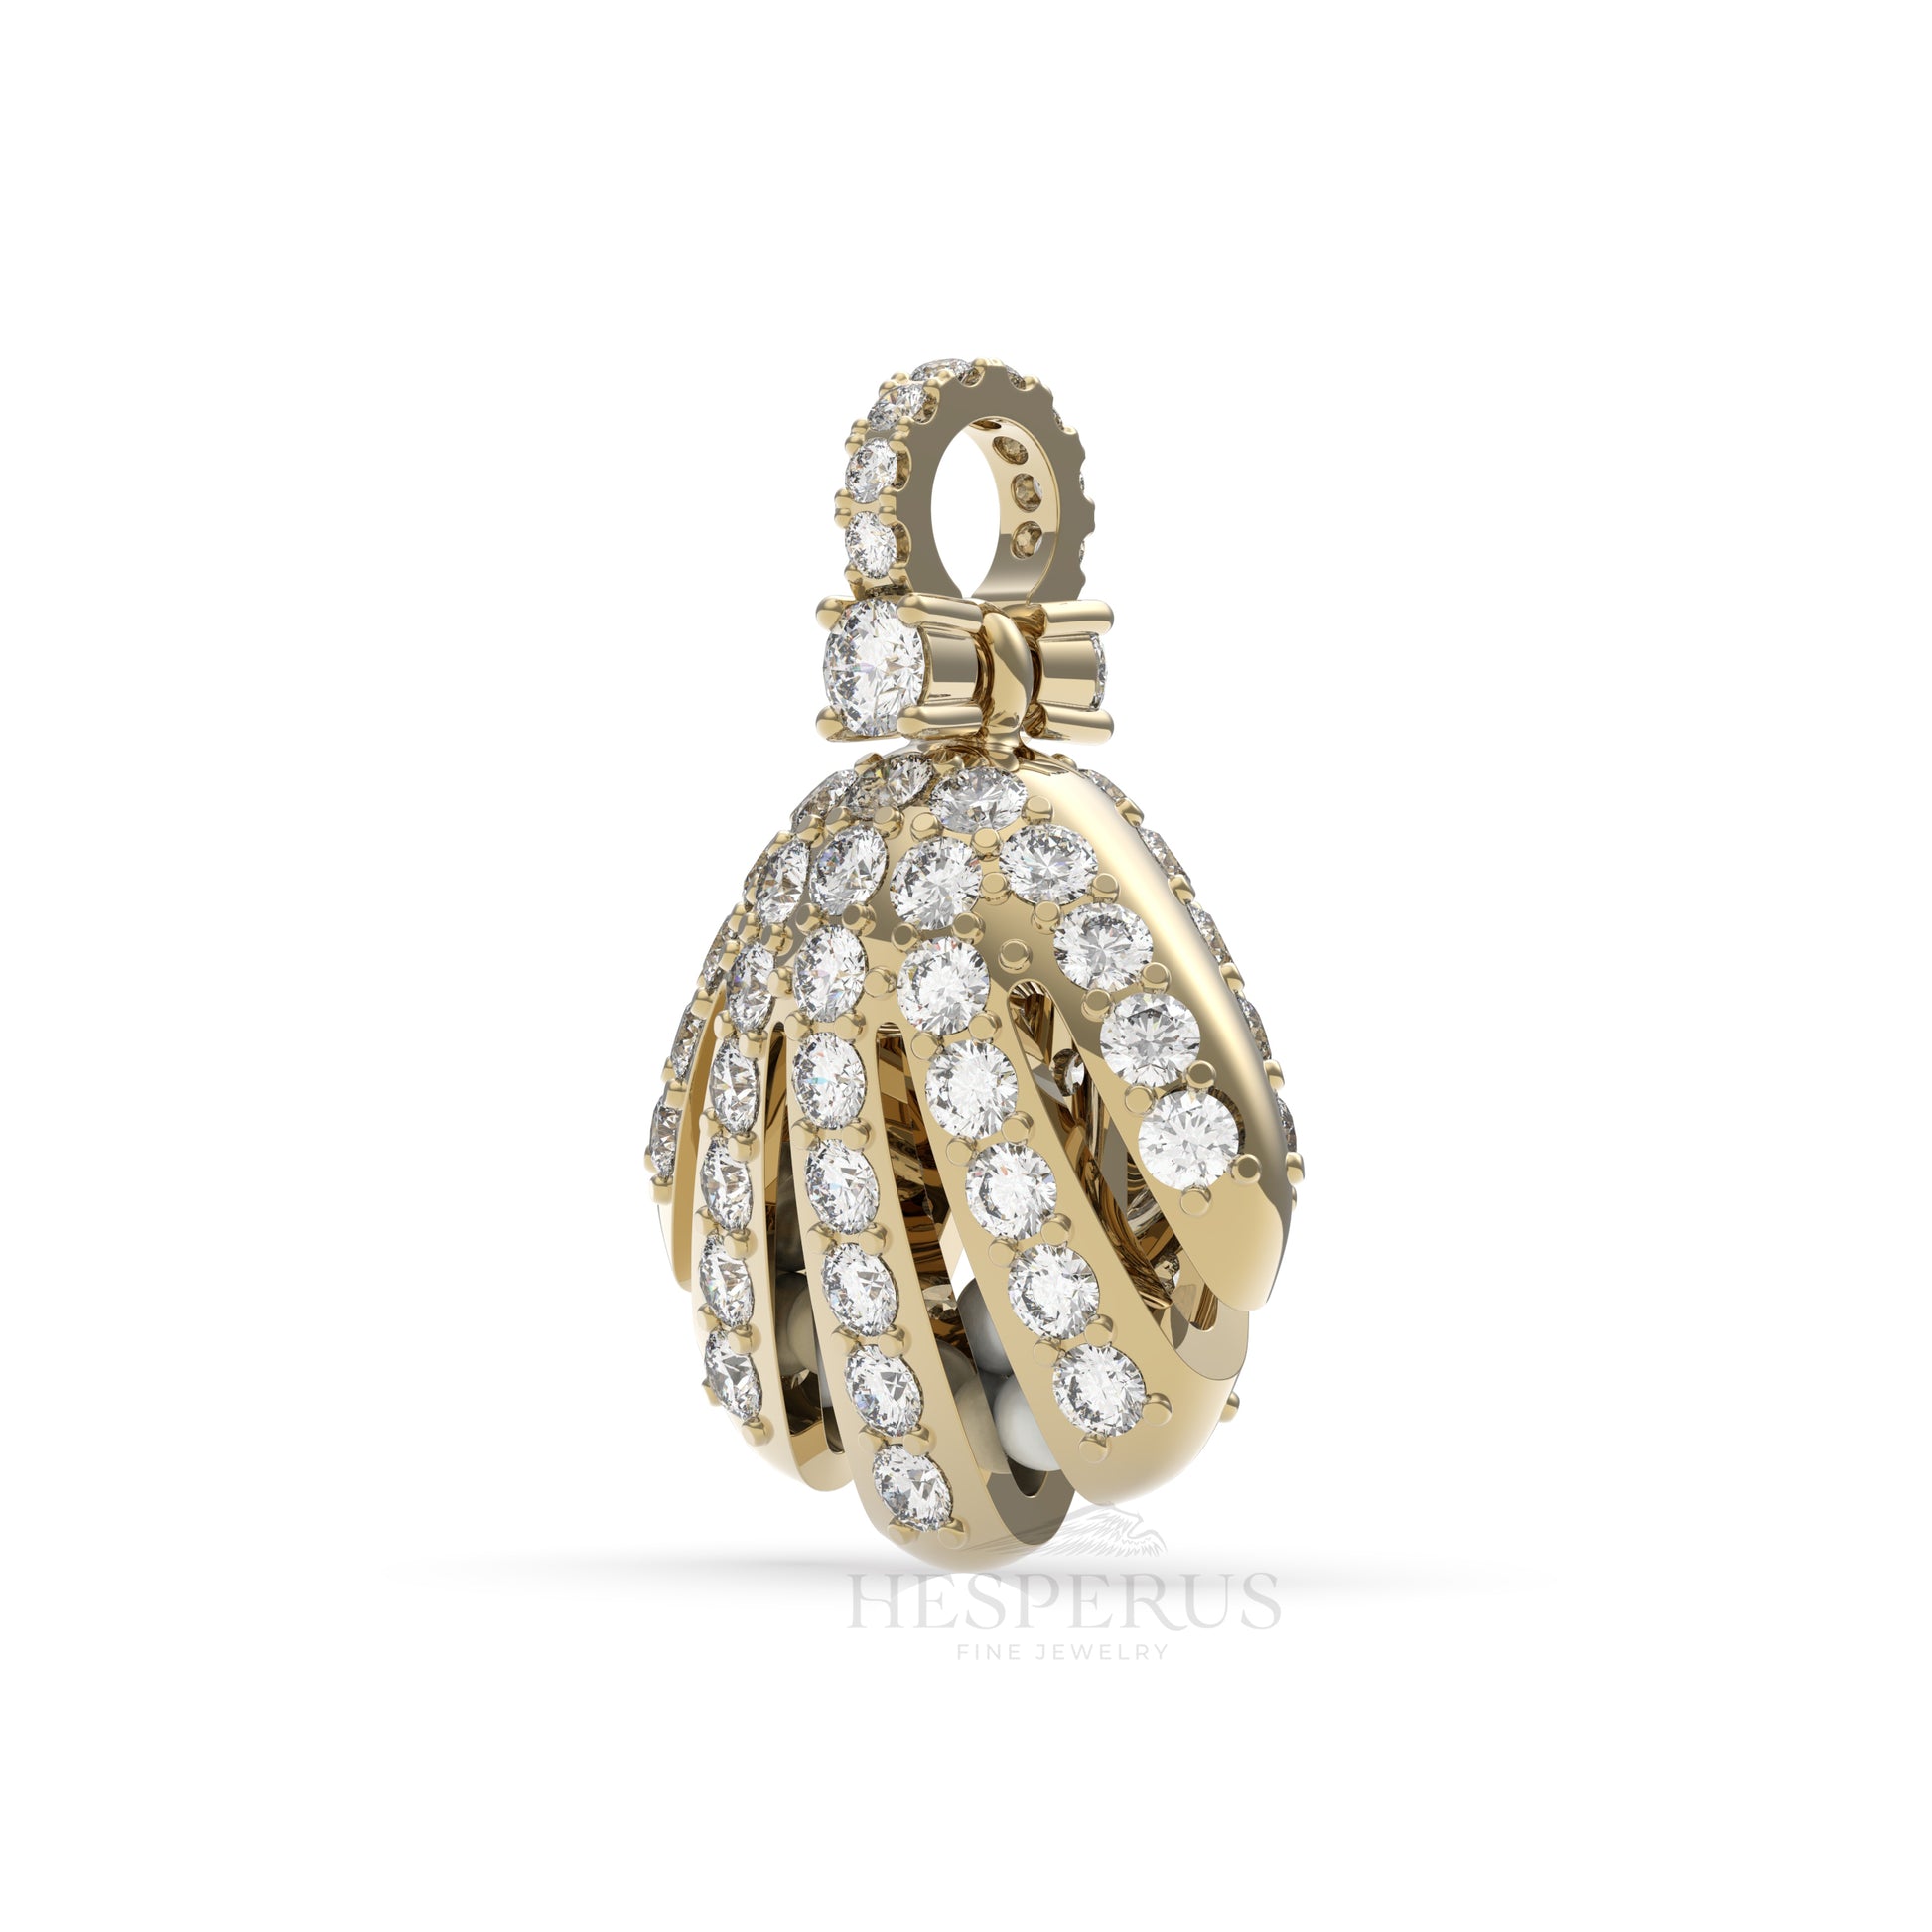 Clam Shell Pendant-Hesperus Fine Jewelry